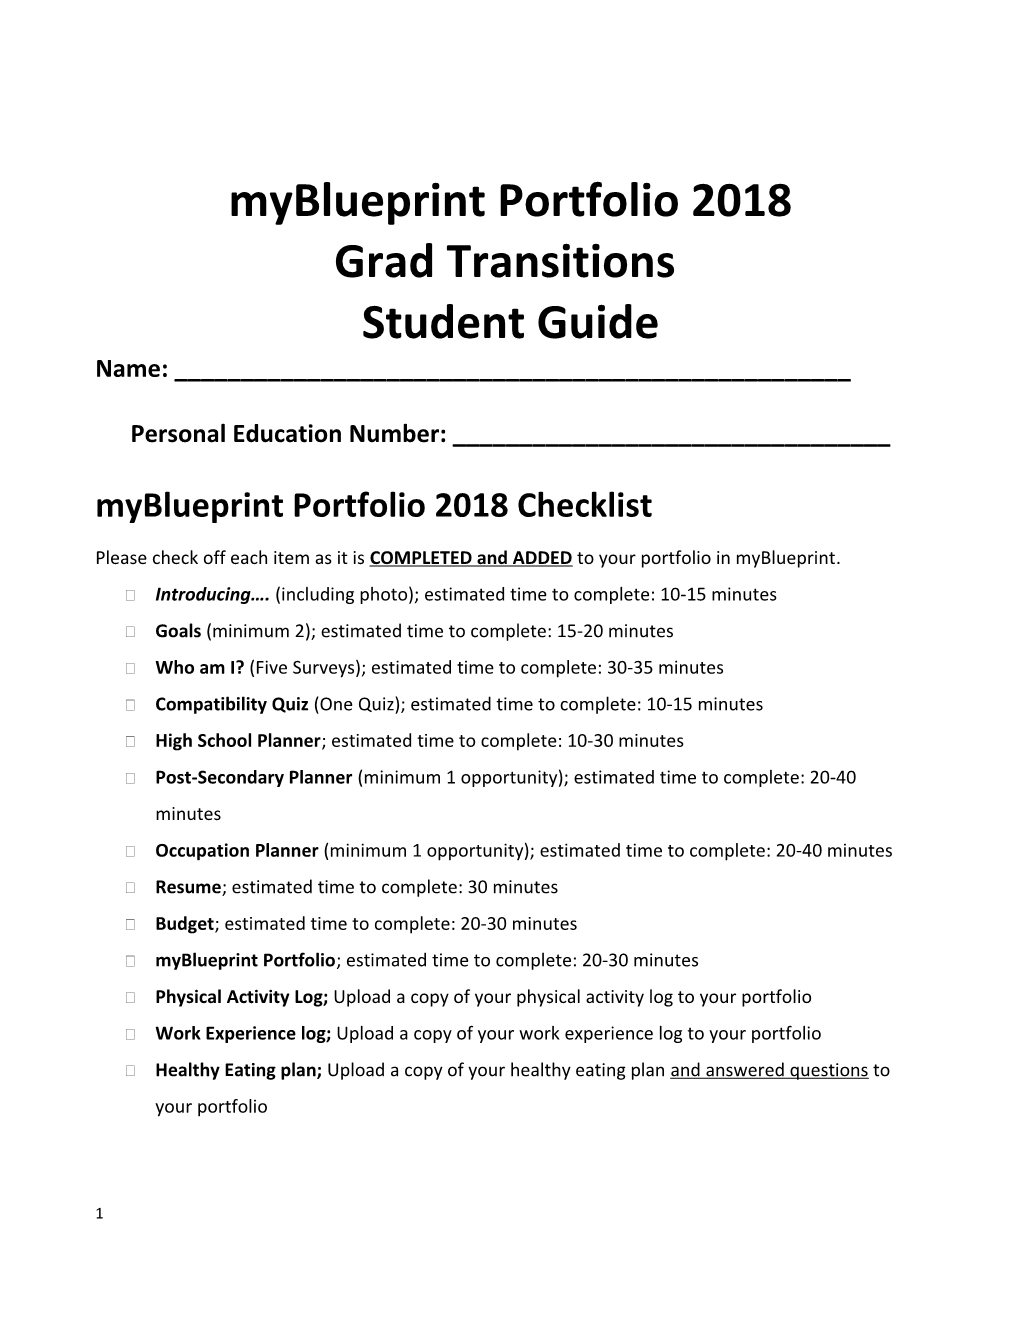 Myblueprint Portfolio 2018